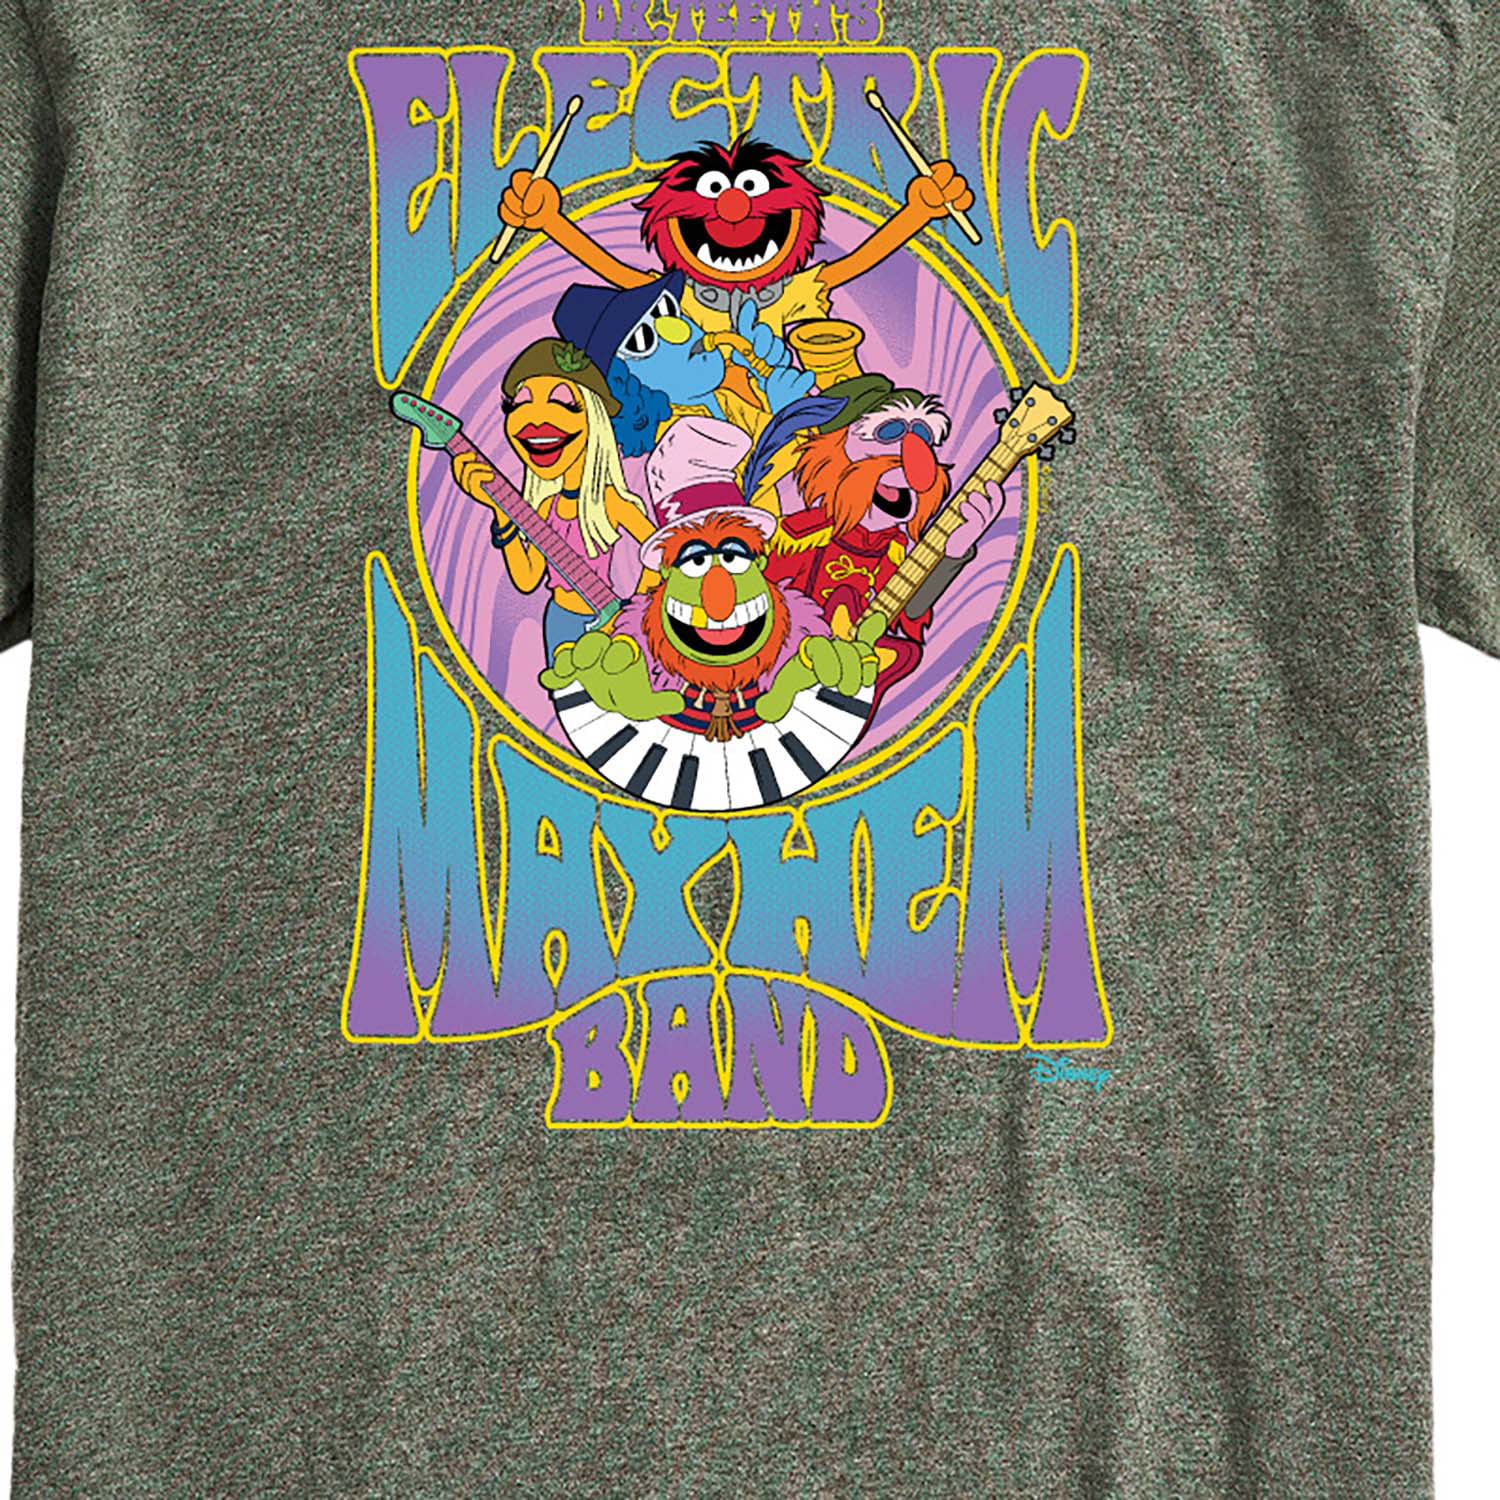 Muppets - Dr Teeth Electric Mayhem Band - Men's Short Sleeve Graphic T-Shirt